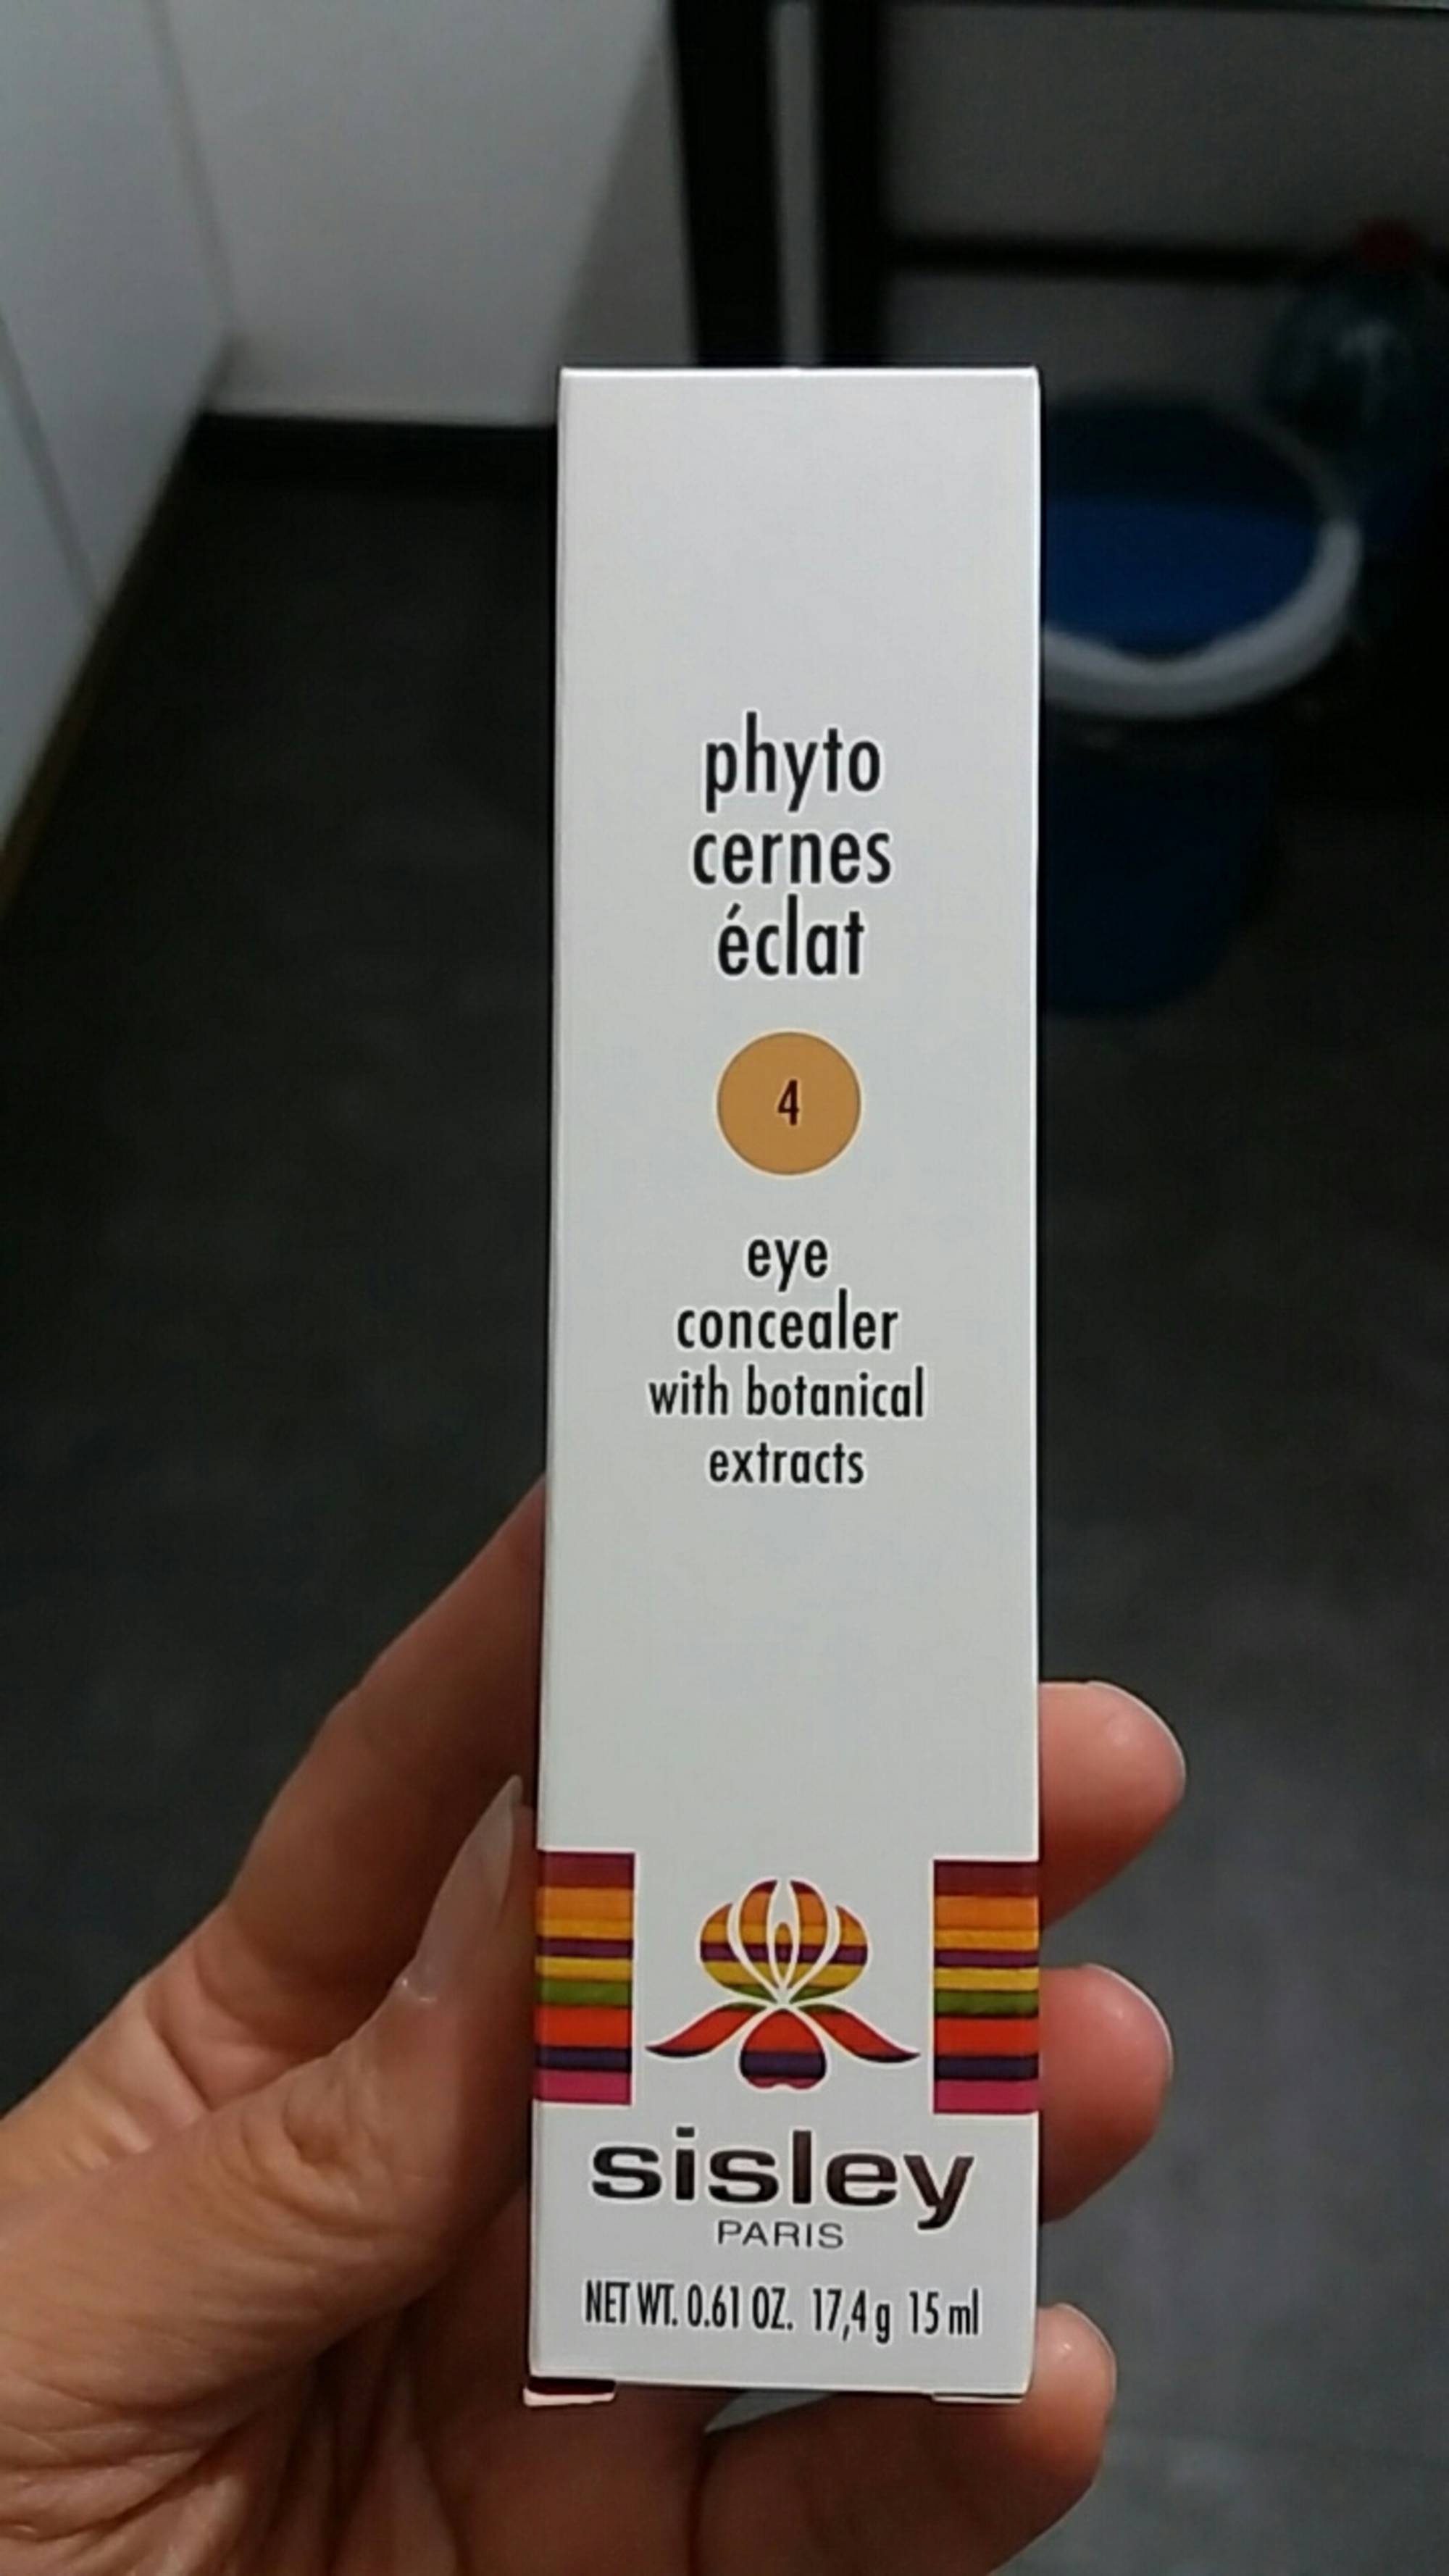 SISLEY - Phyto cernes éclat 4